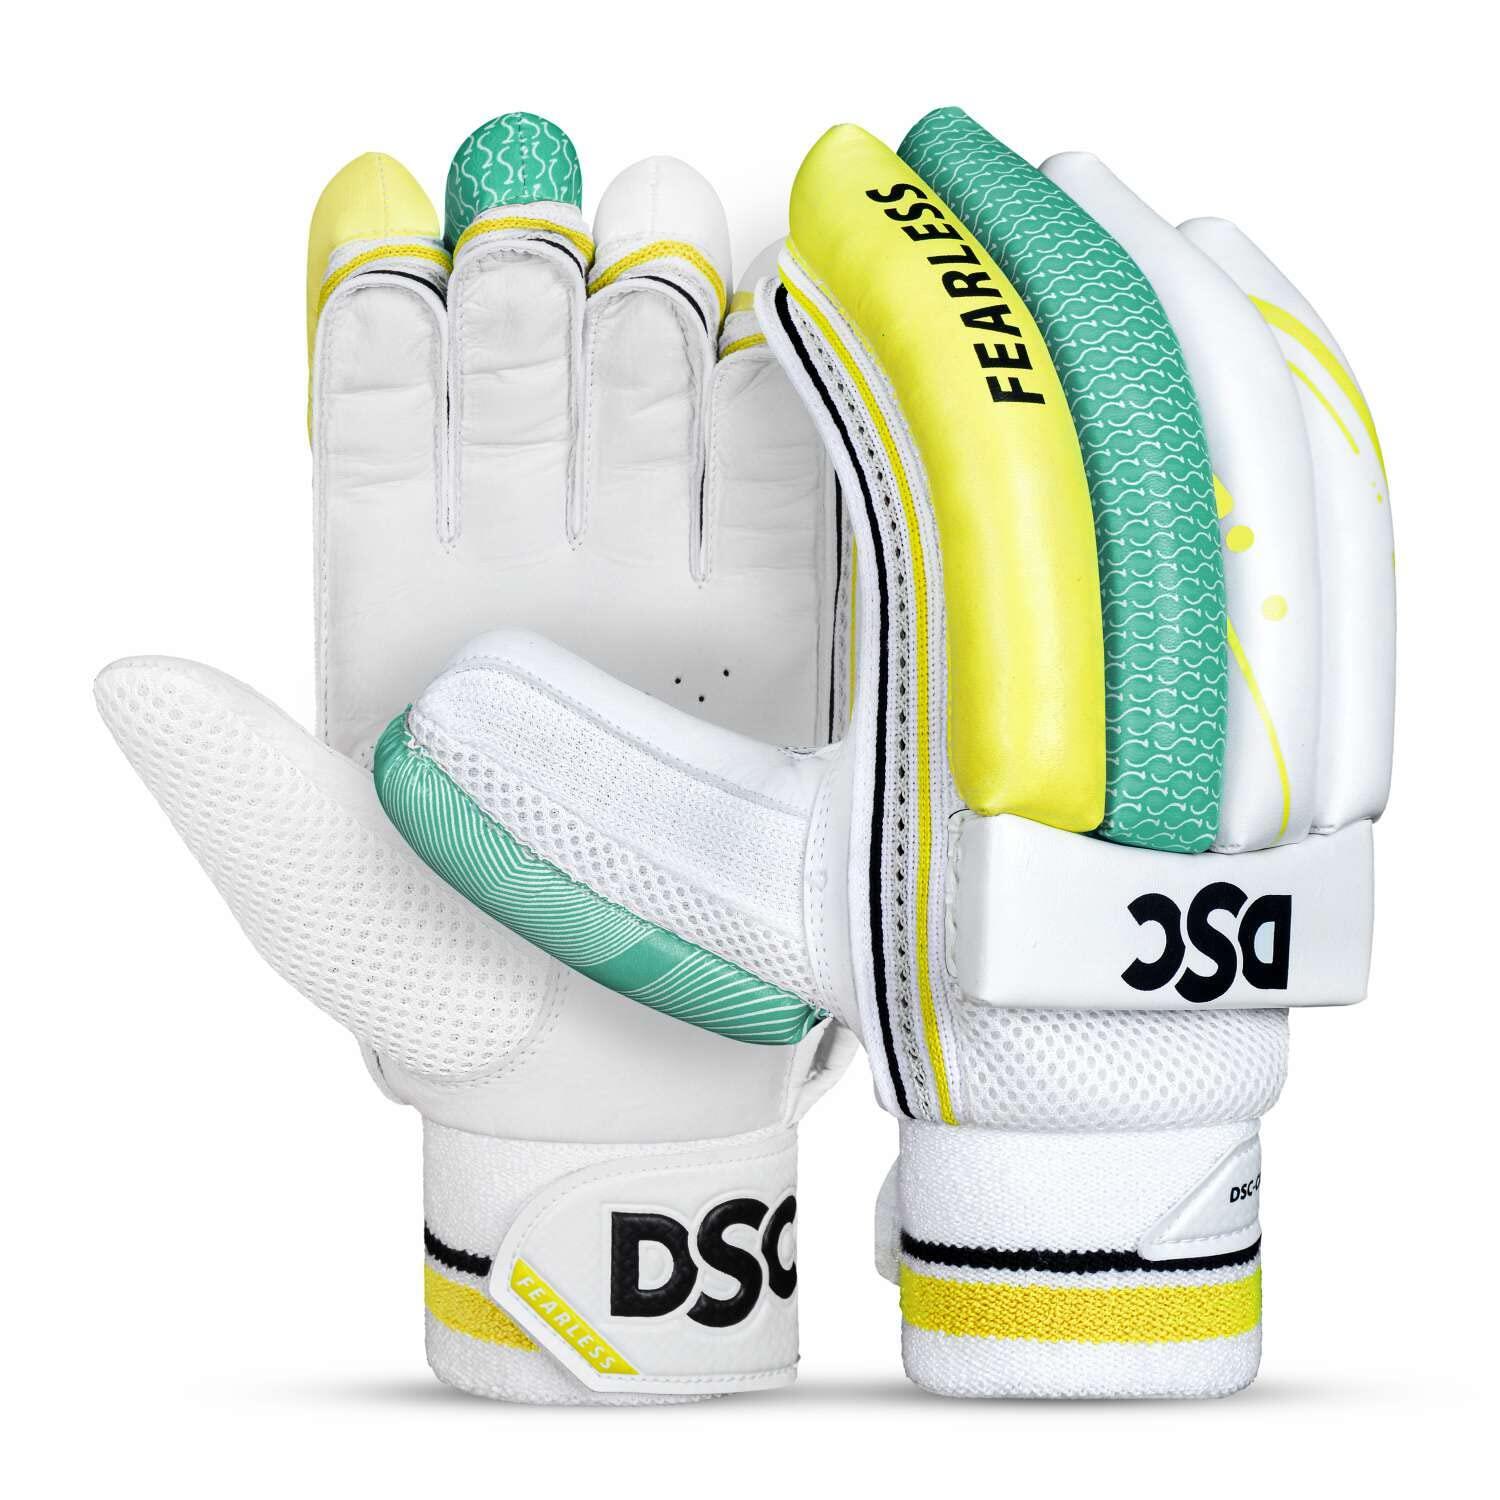 DSC DSC Condor Atmos Leather Cricket Batting Gloves Mens